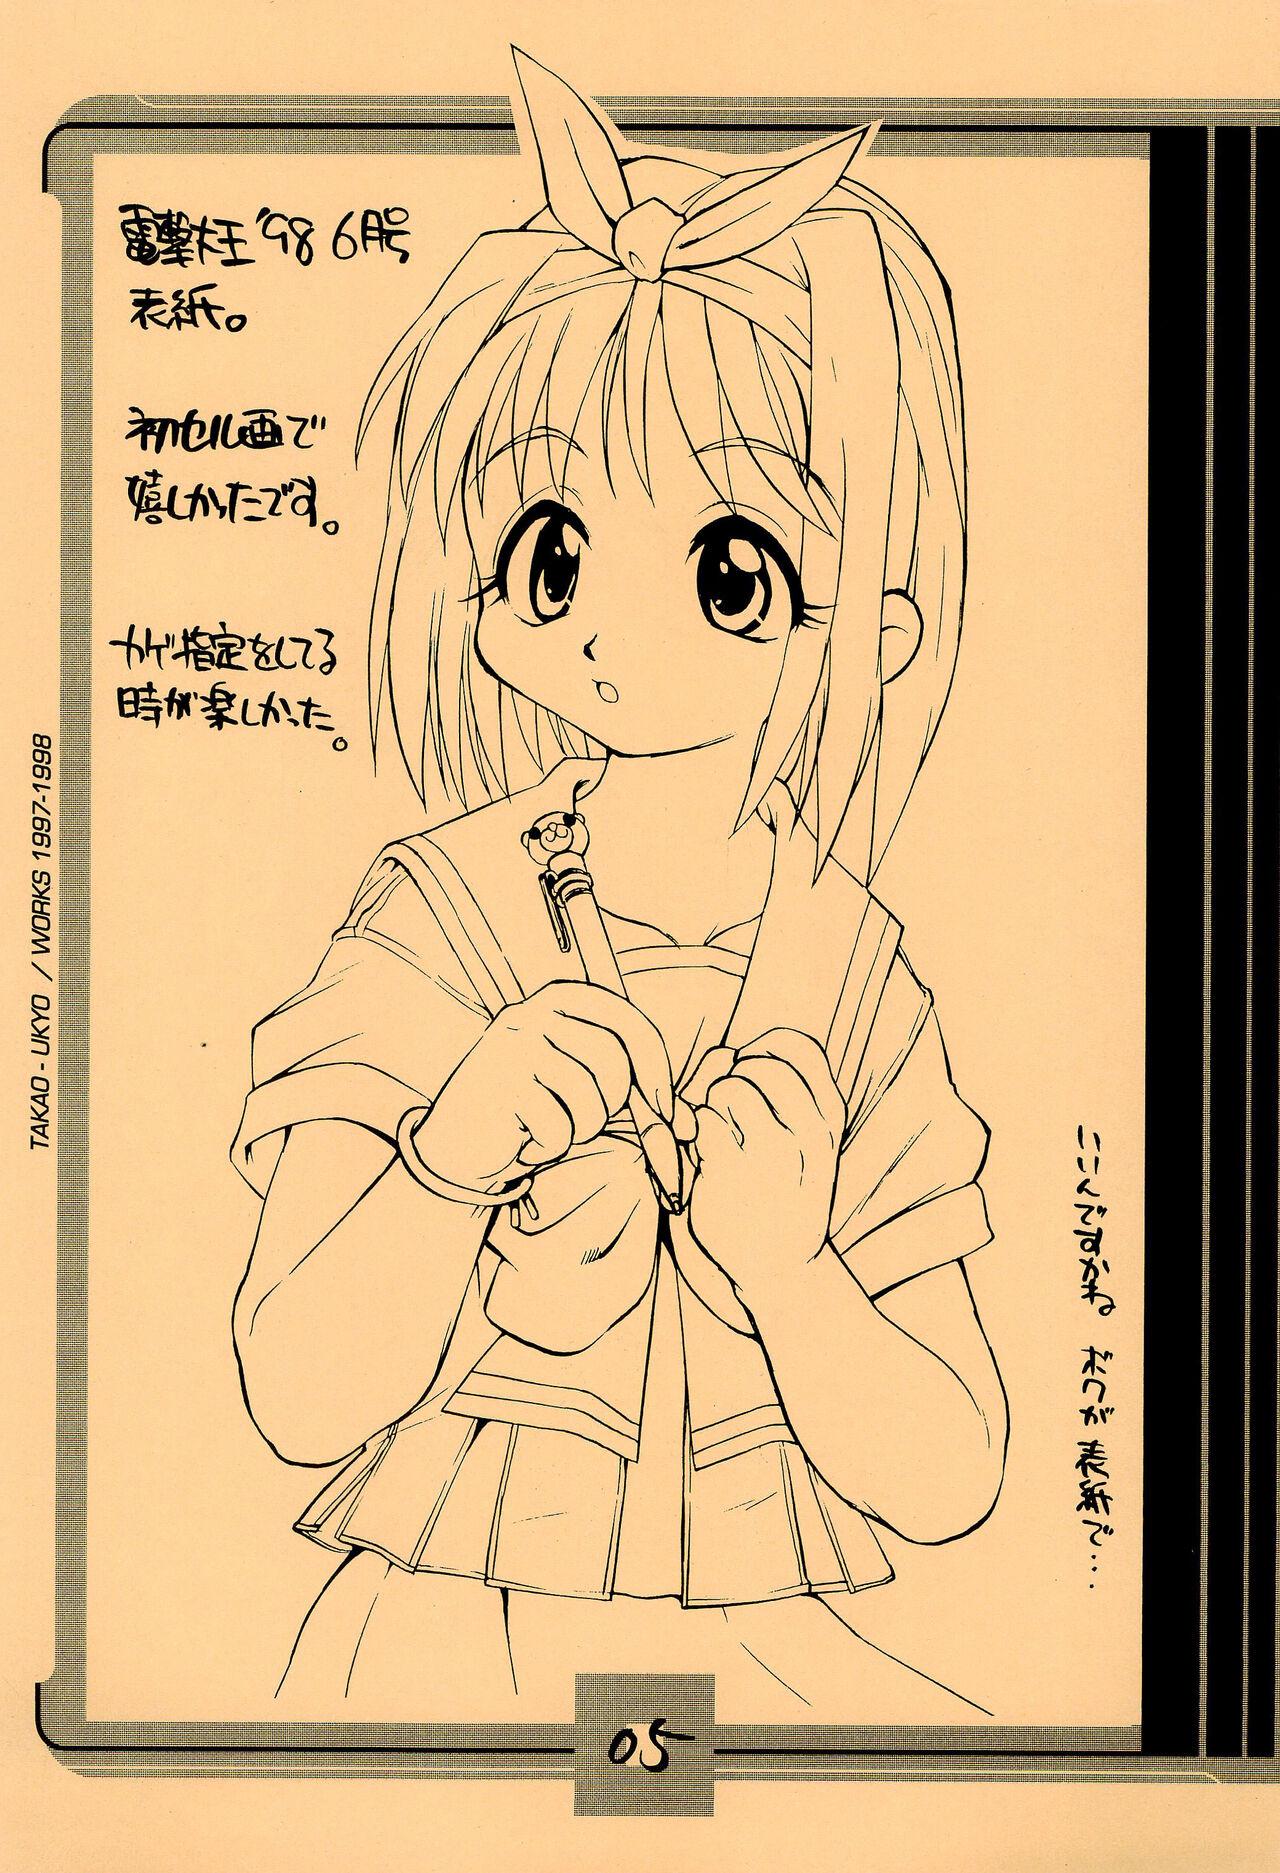 Roleplay Mamagult Katsudou Houkokusho Hikae 1997/11-1998/08 - To heart Fun fun pharmacy 10 carat torte Amiga - Page 5